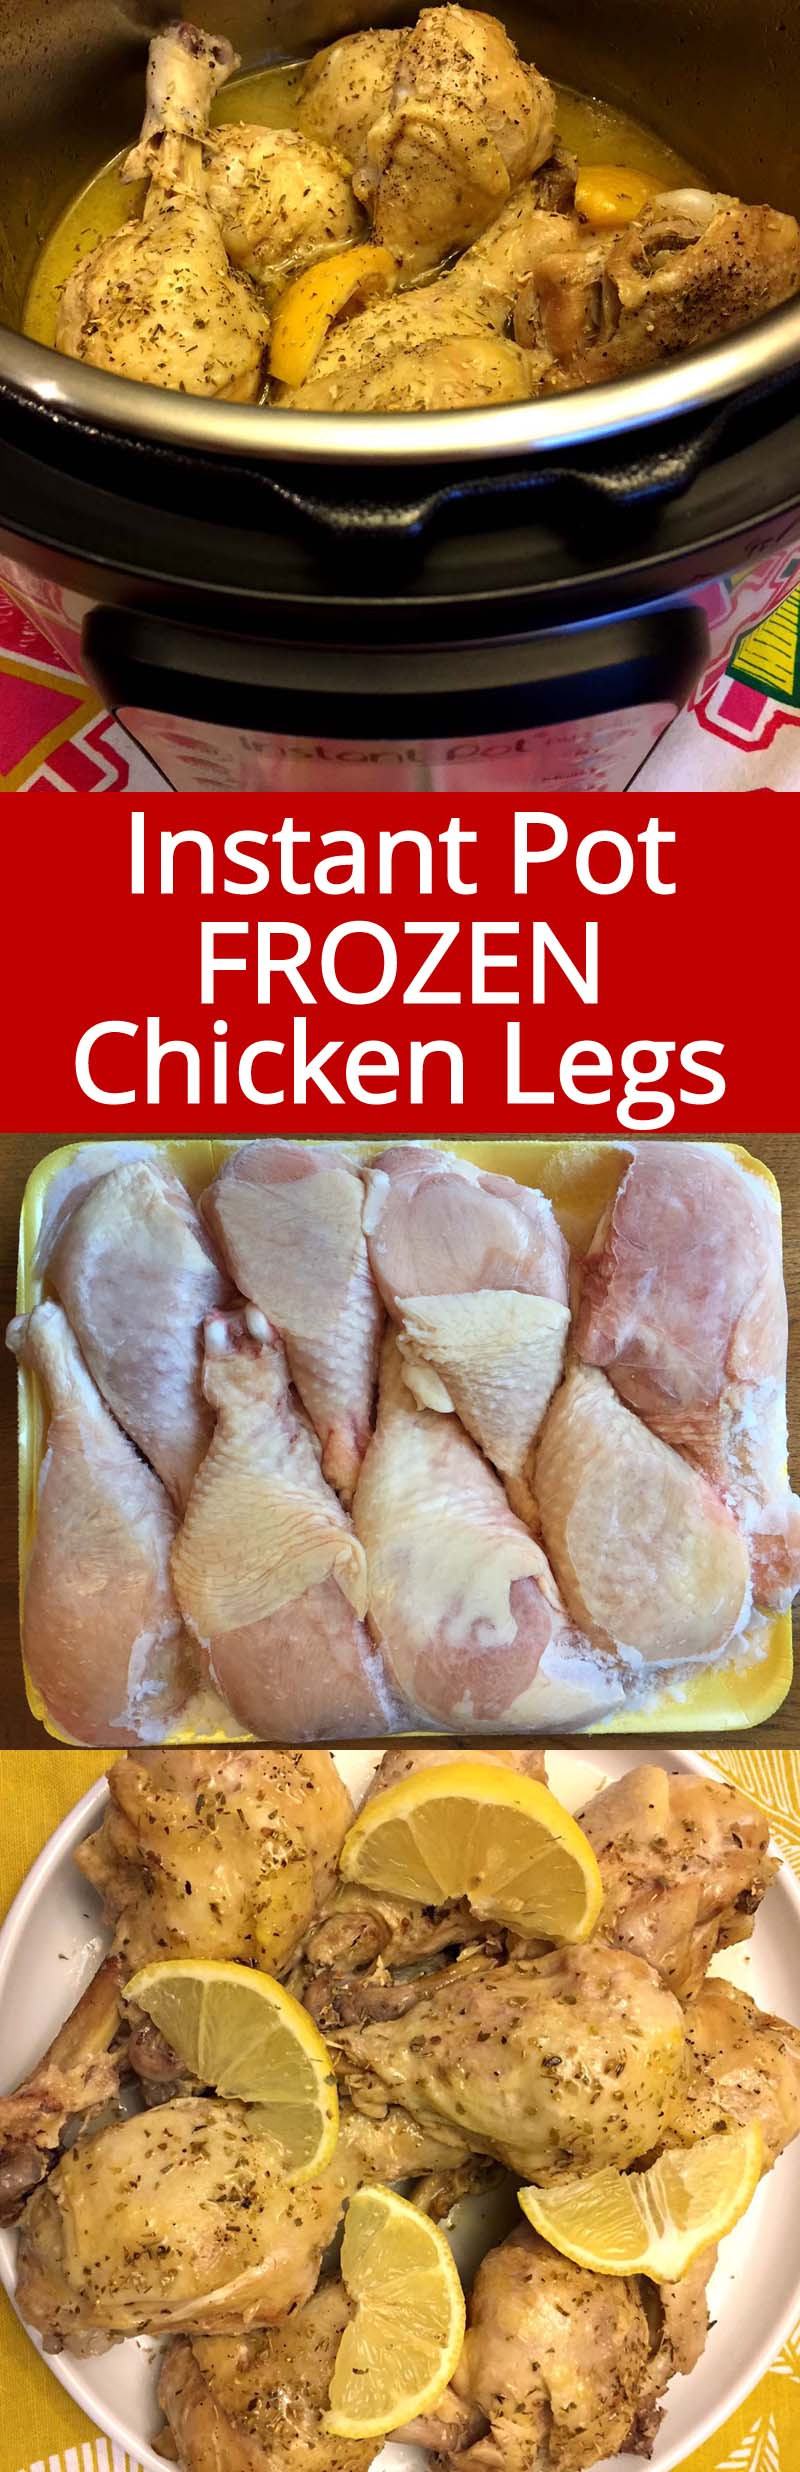 Instant Pot Chicken Legs
 Instant Pot Frozen Chicken Legs With Lemon And Garlic